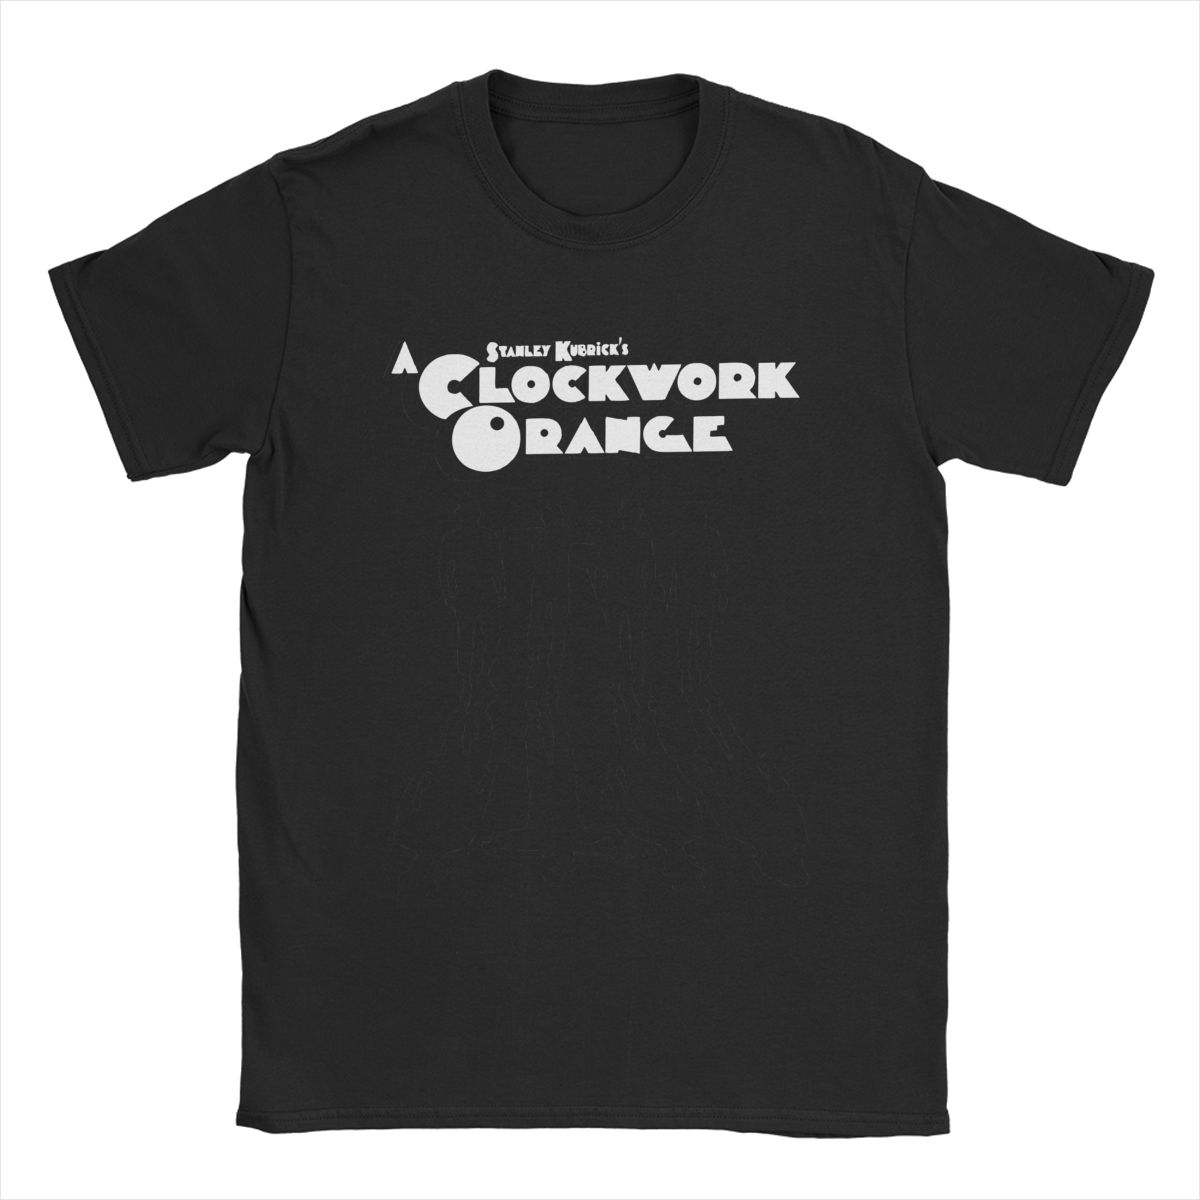 A Clockwork Orange - 100% Cotton T-Shirt - Stanley Kubrick - Sci-Fi Fan Garment-Black-S-